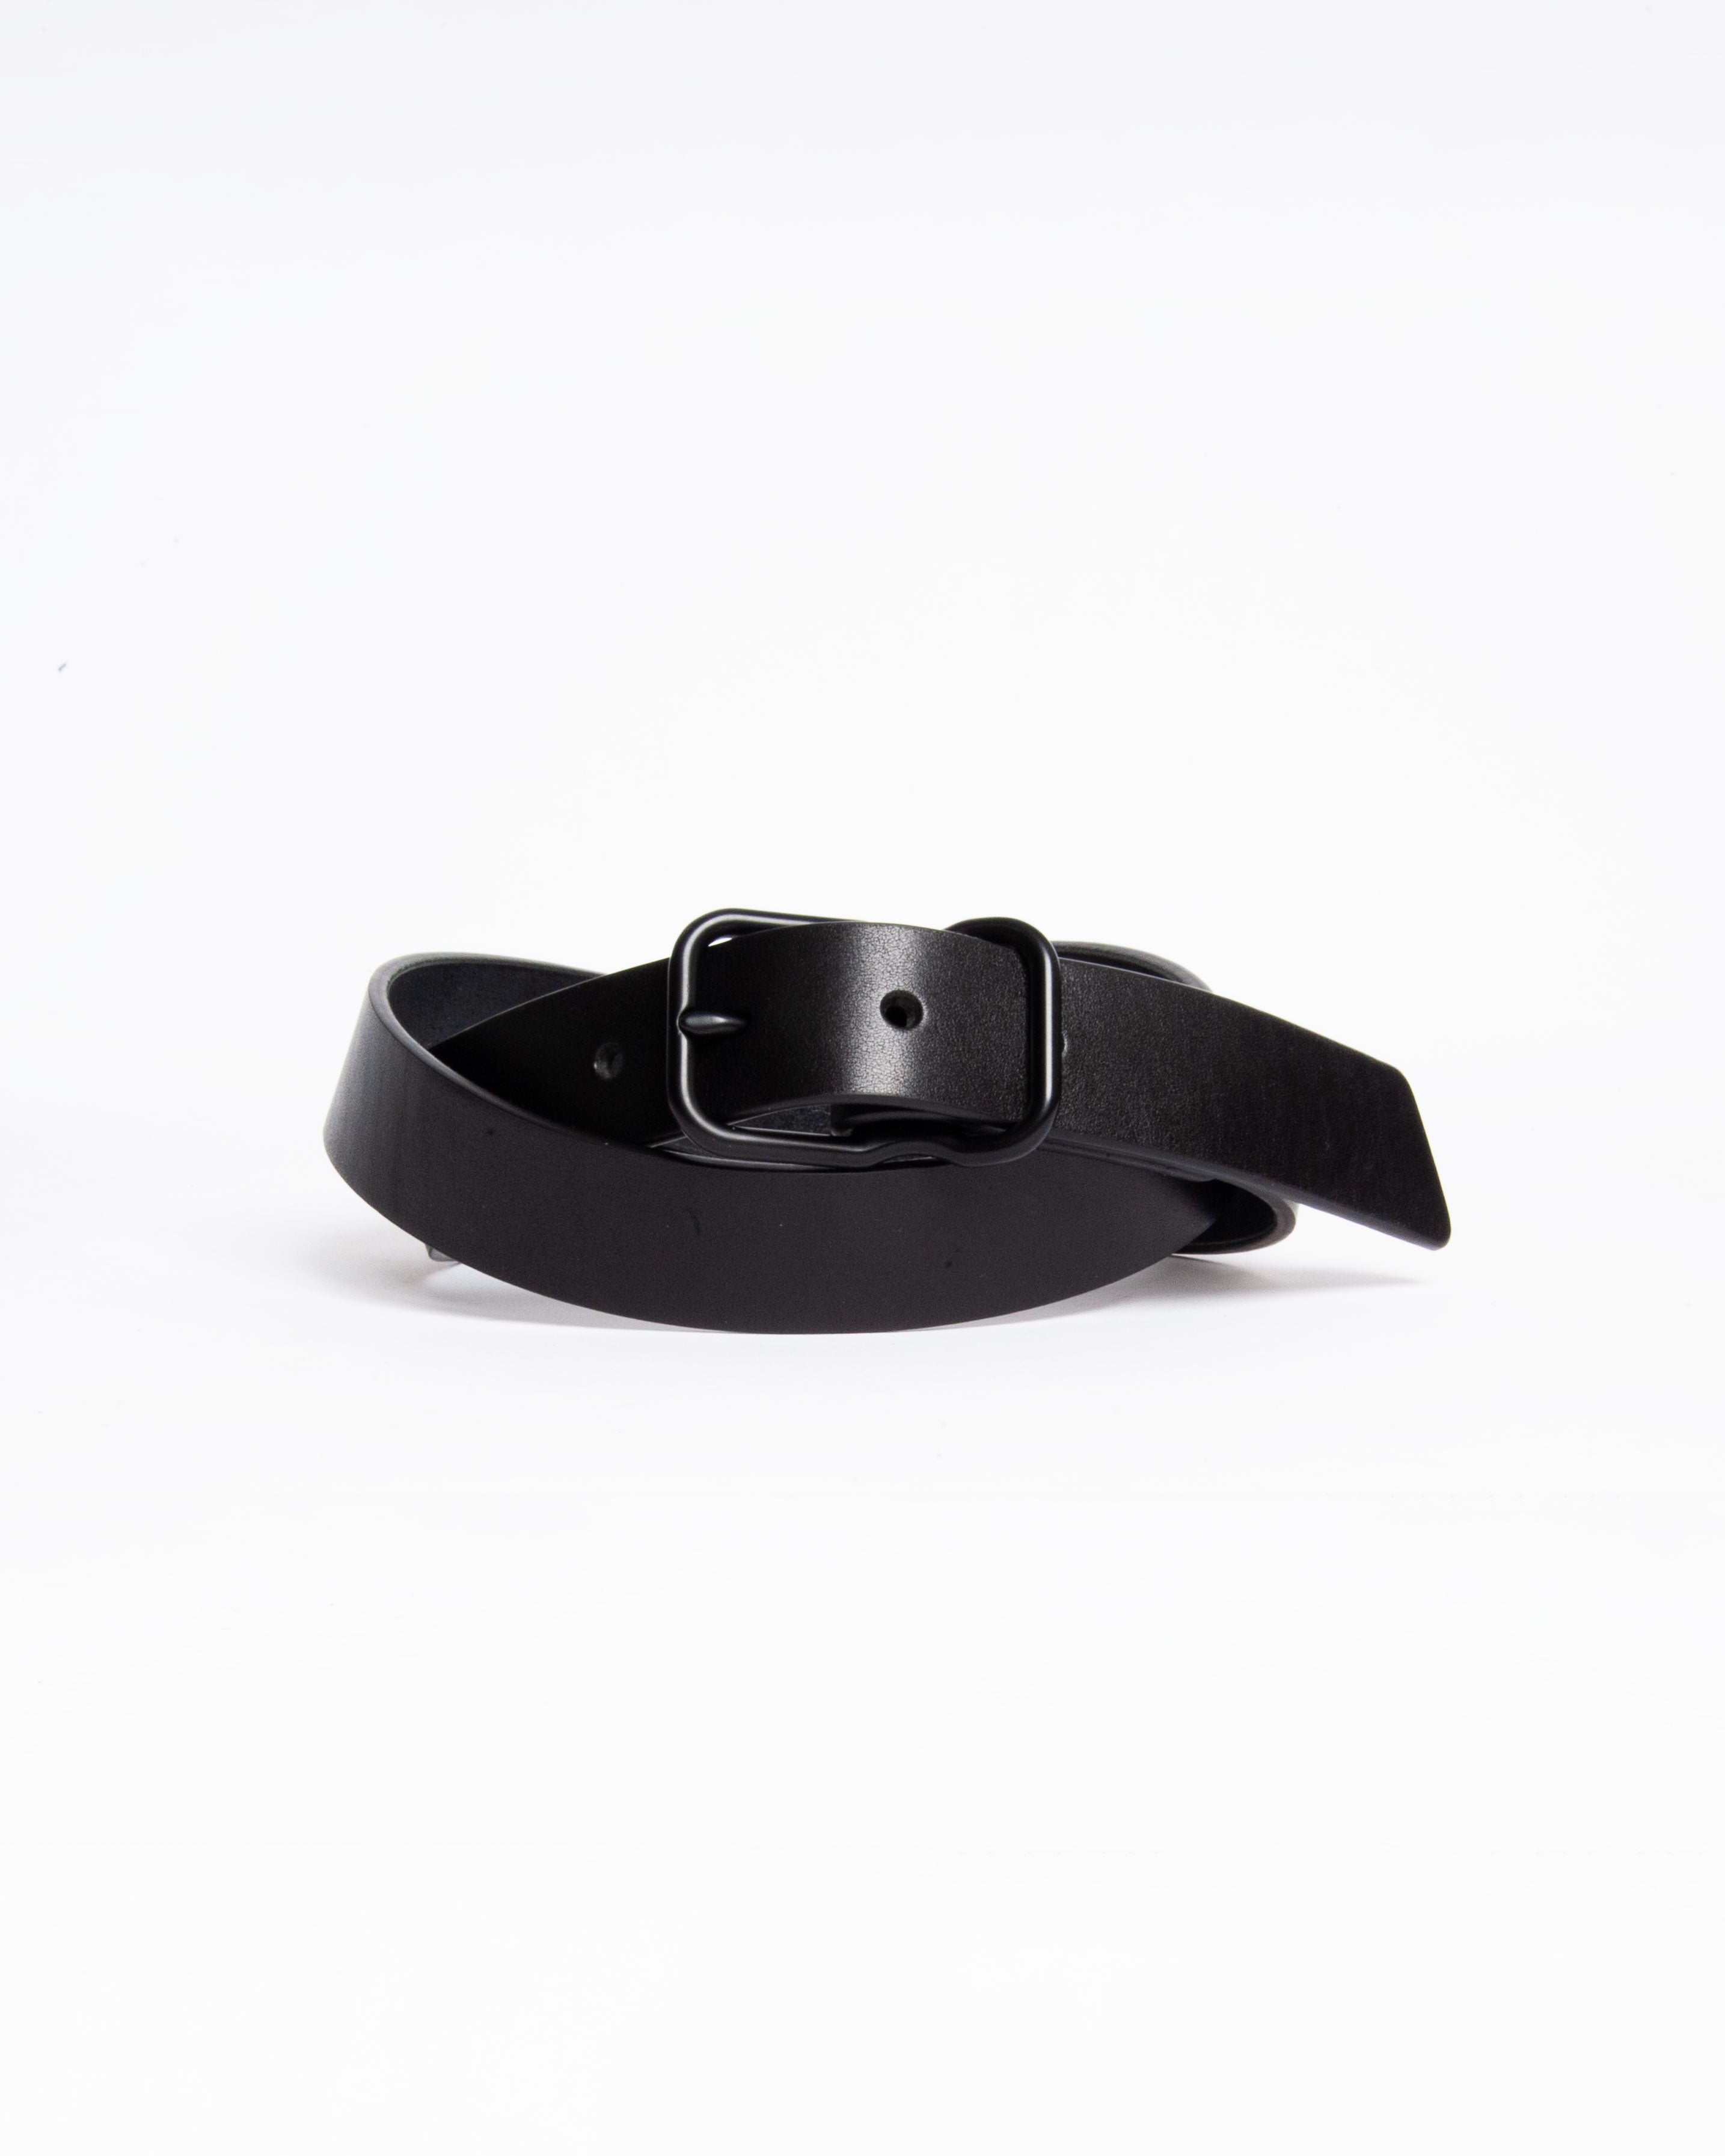 118 Signature Leather Belt - Narrow - Black - Matte Black